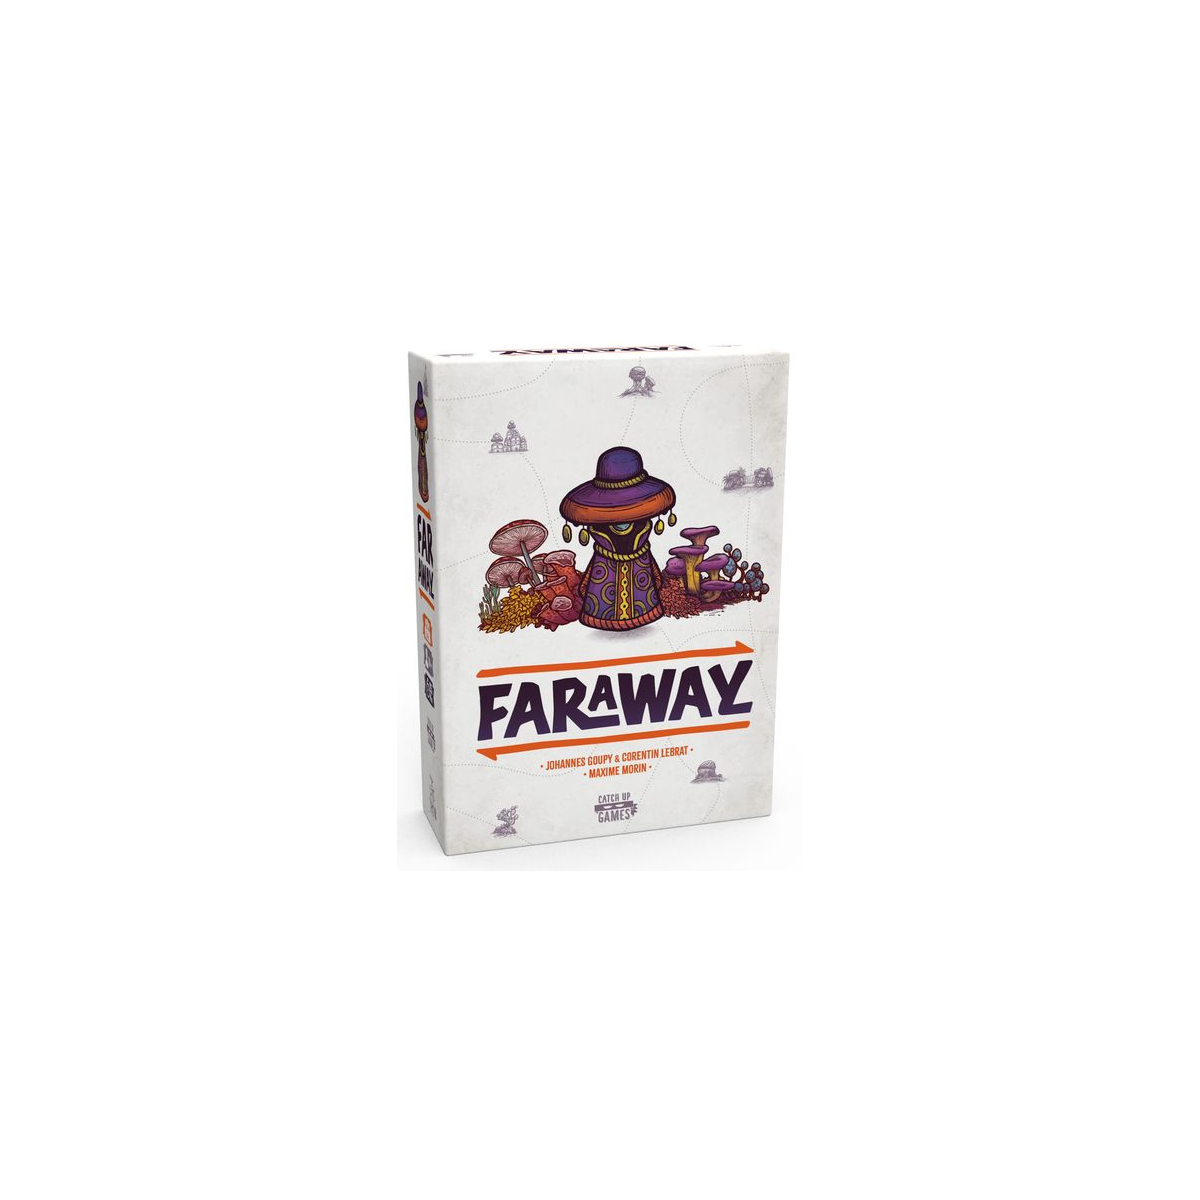 VIDEO. Faraway, un jeu de stratégie original et bien illustré